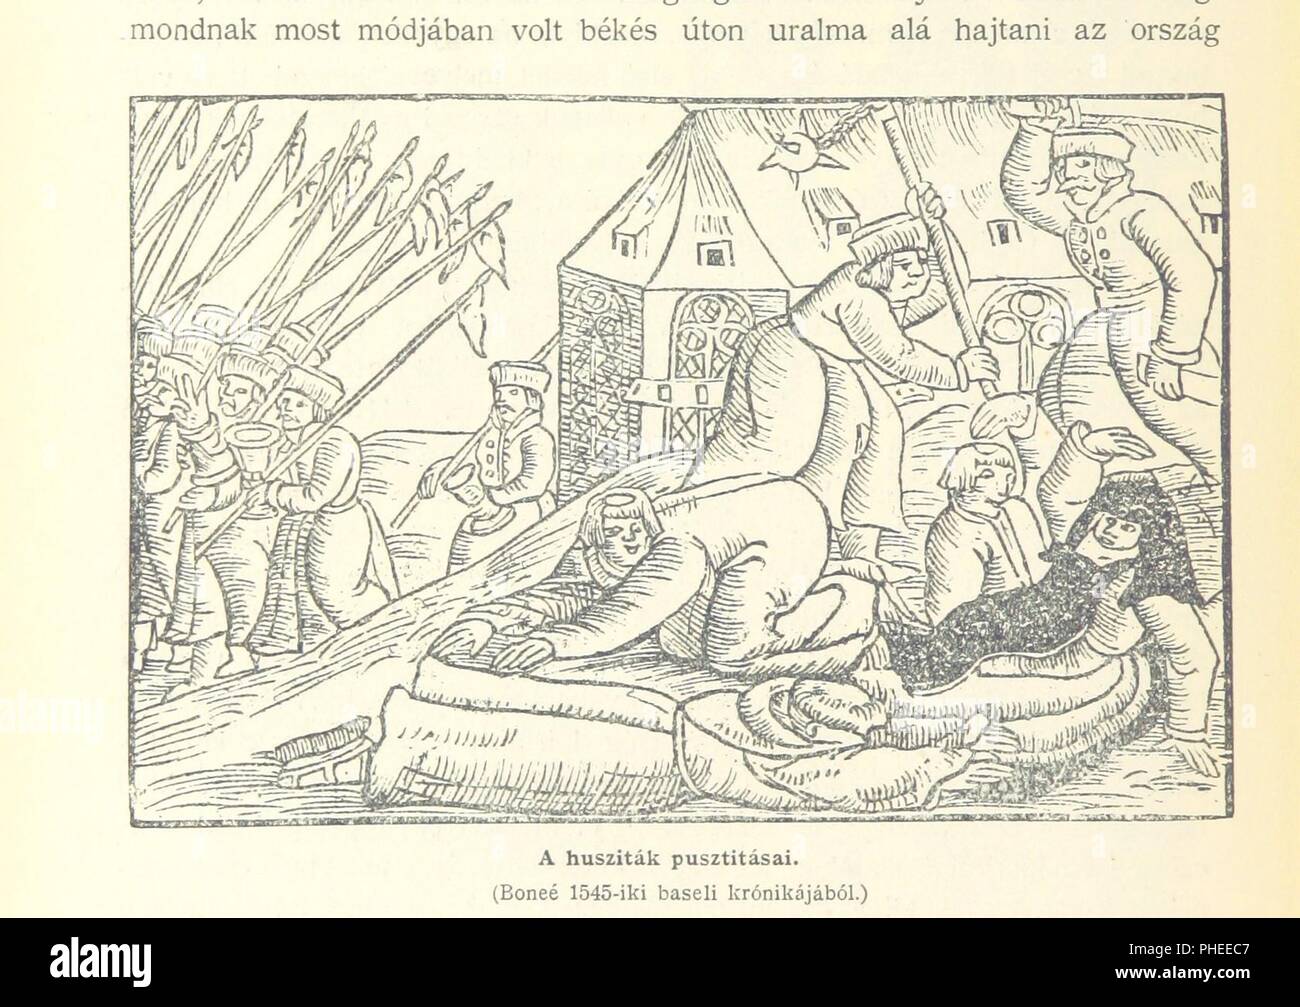 Immagine dalla pagina 656 di un "magyar nemzet tortenete. Szerkeszti Szilágyi S. [con mappe e illustrazioni.]' . Foto Stock